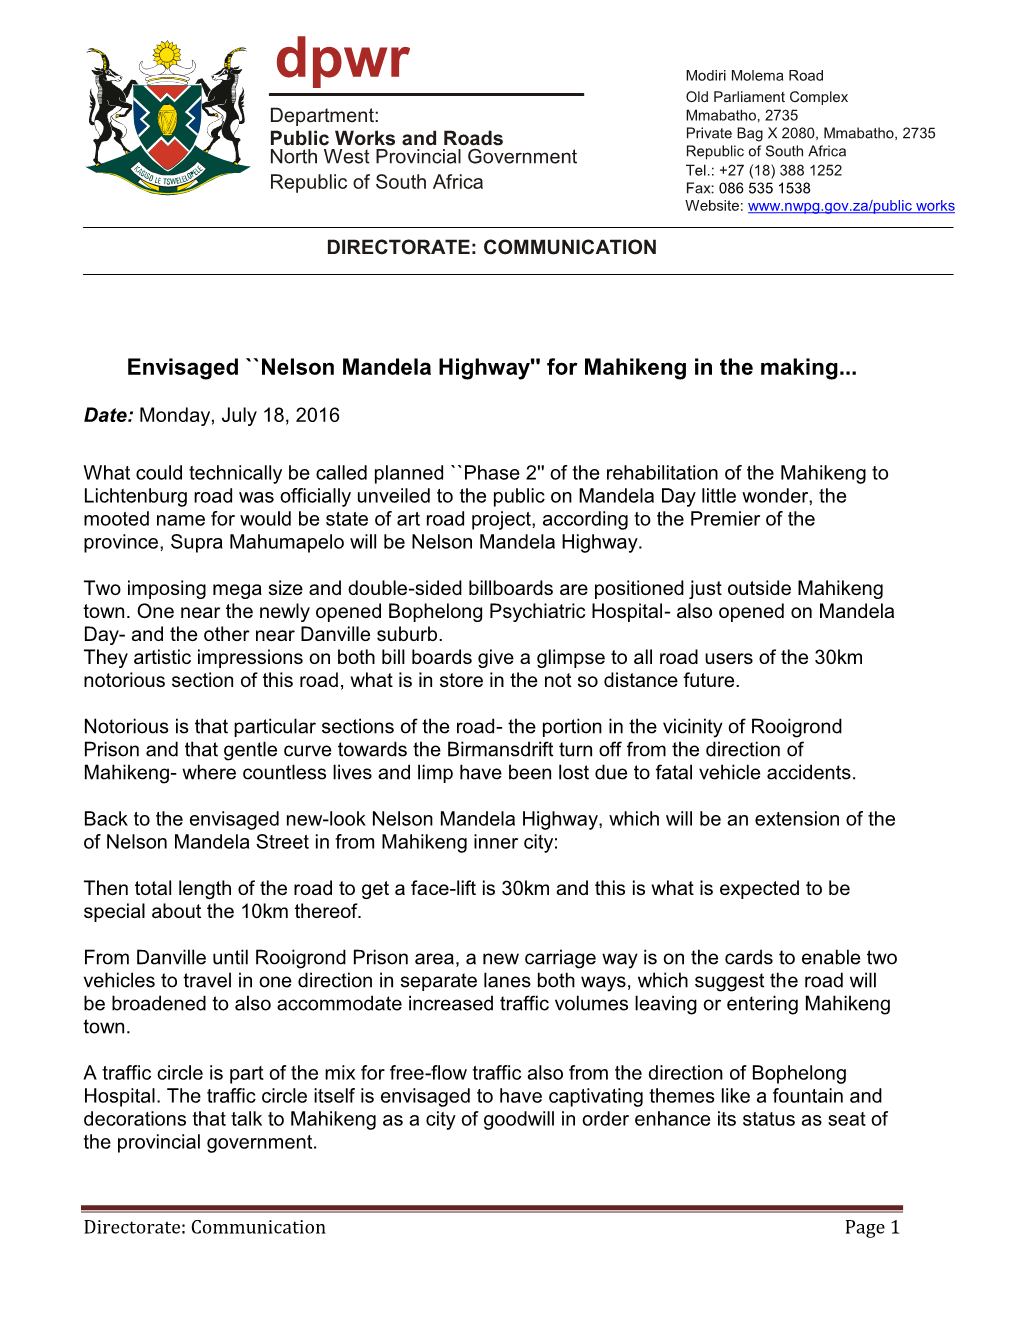 Nelson Mandela Highway'' for Mahikeng in the Making